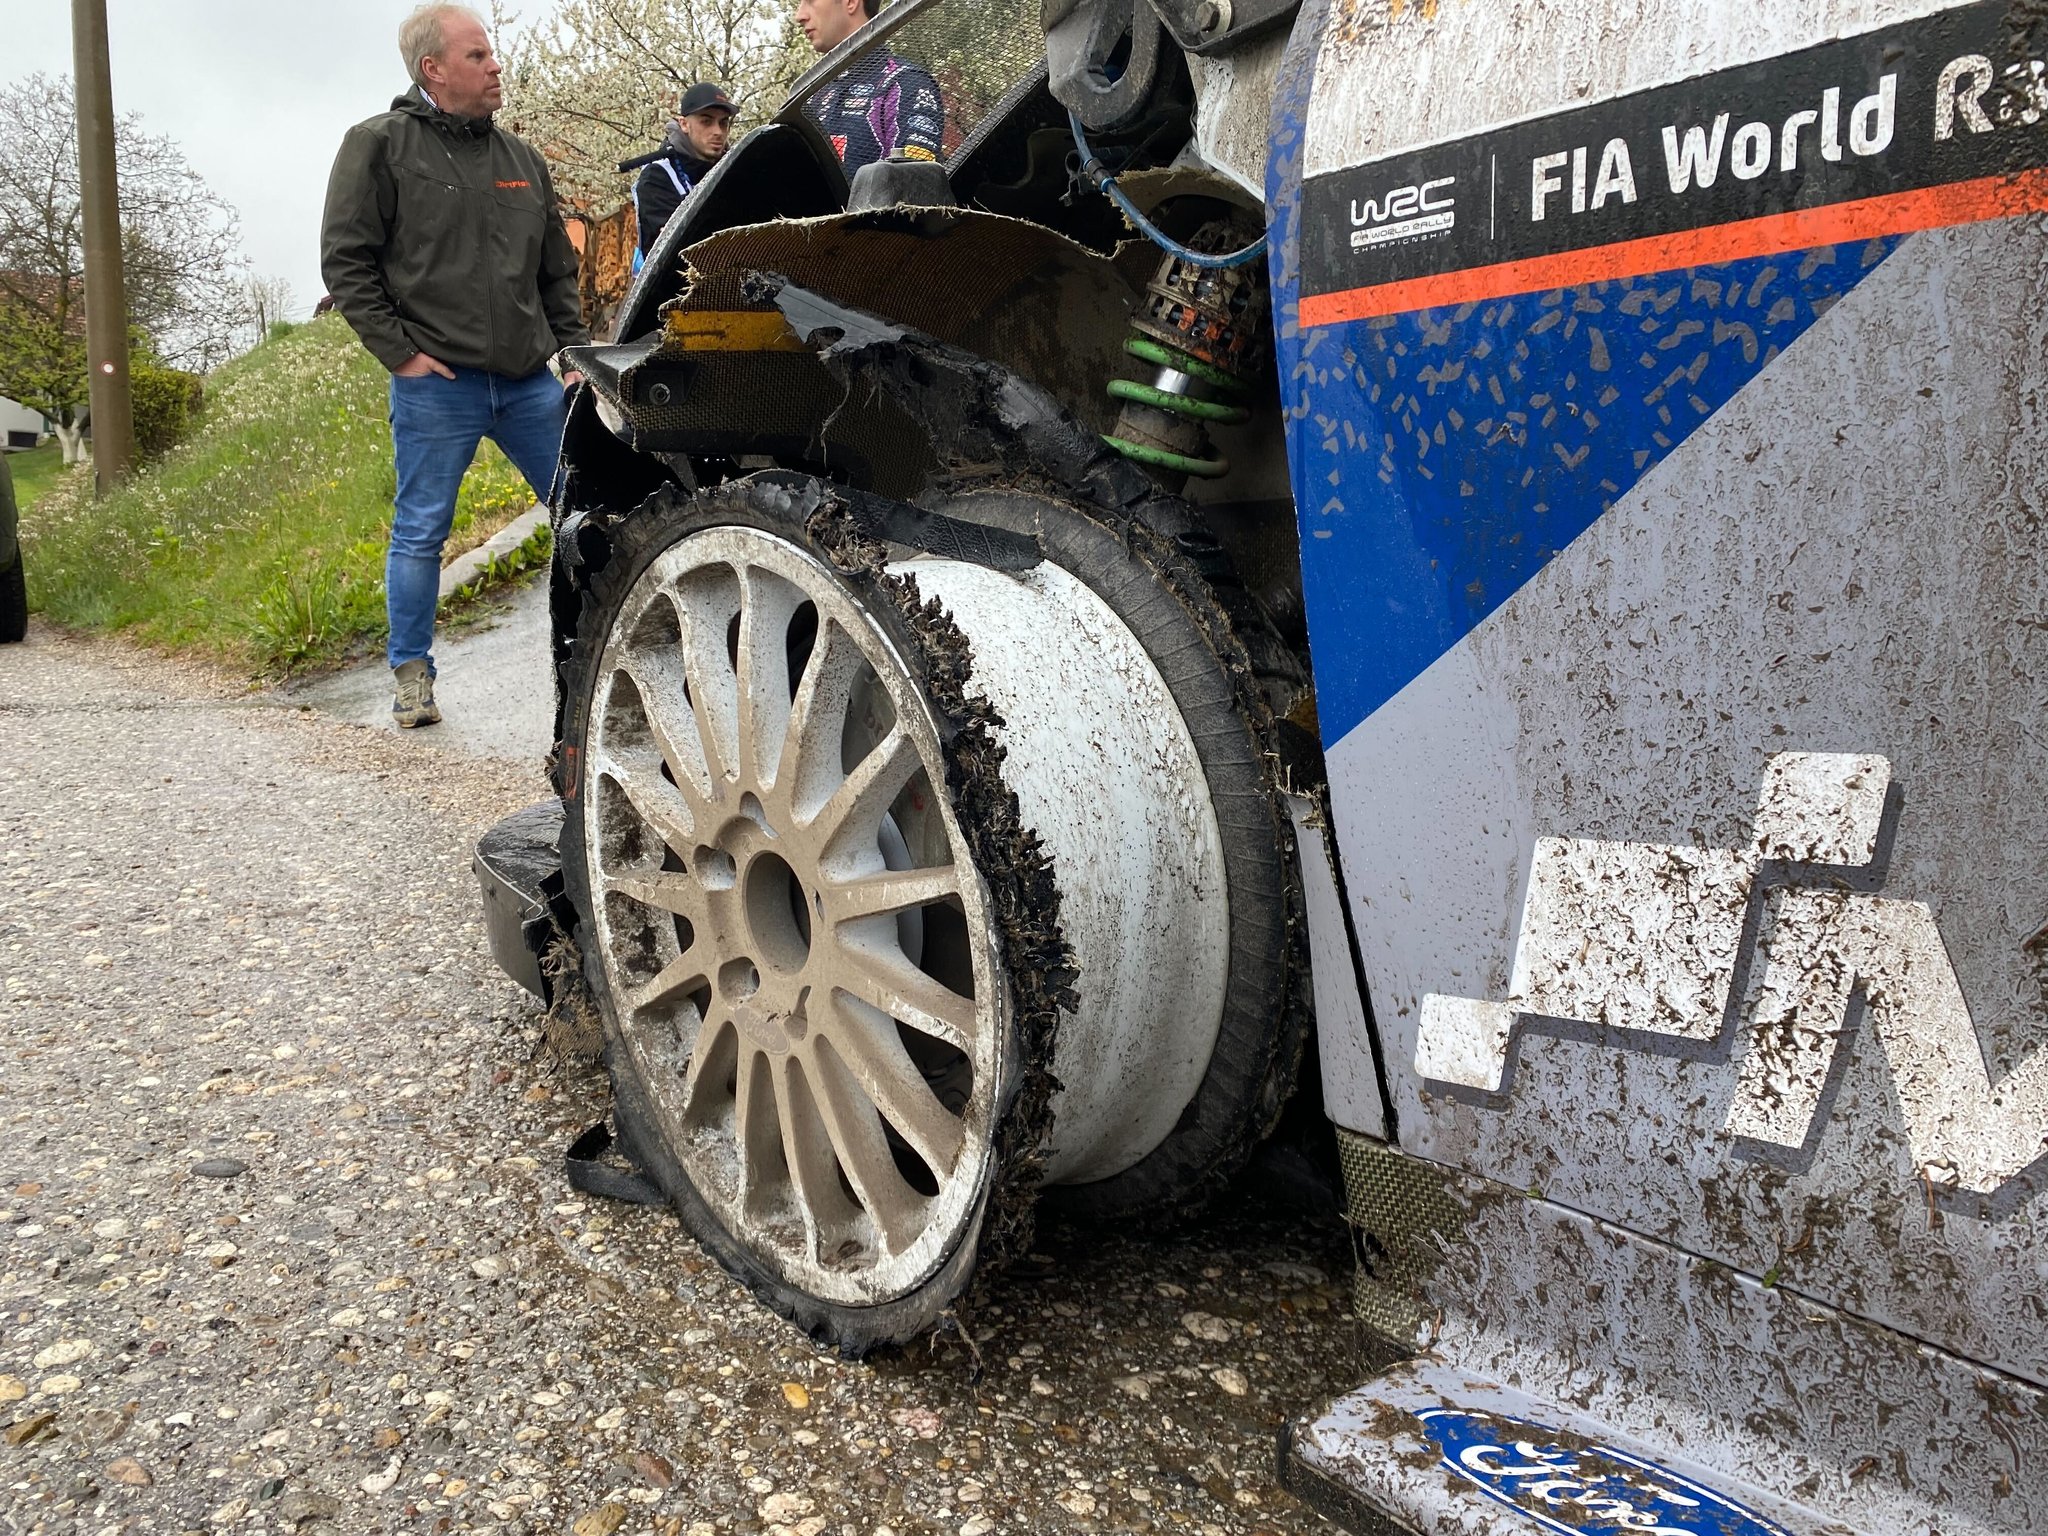 WRC: Croatia Rally [21-24 Abril] - Página 2 FQ7-Vr-XoAEscjr?format=jpg&name=large